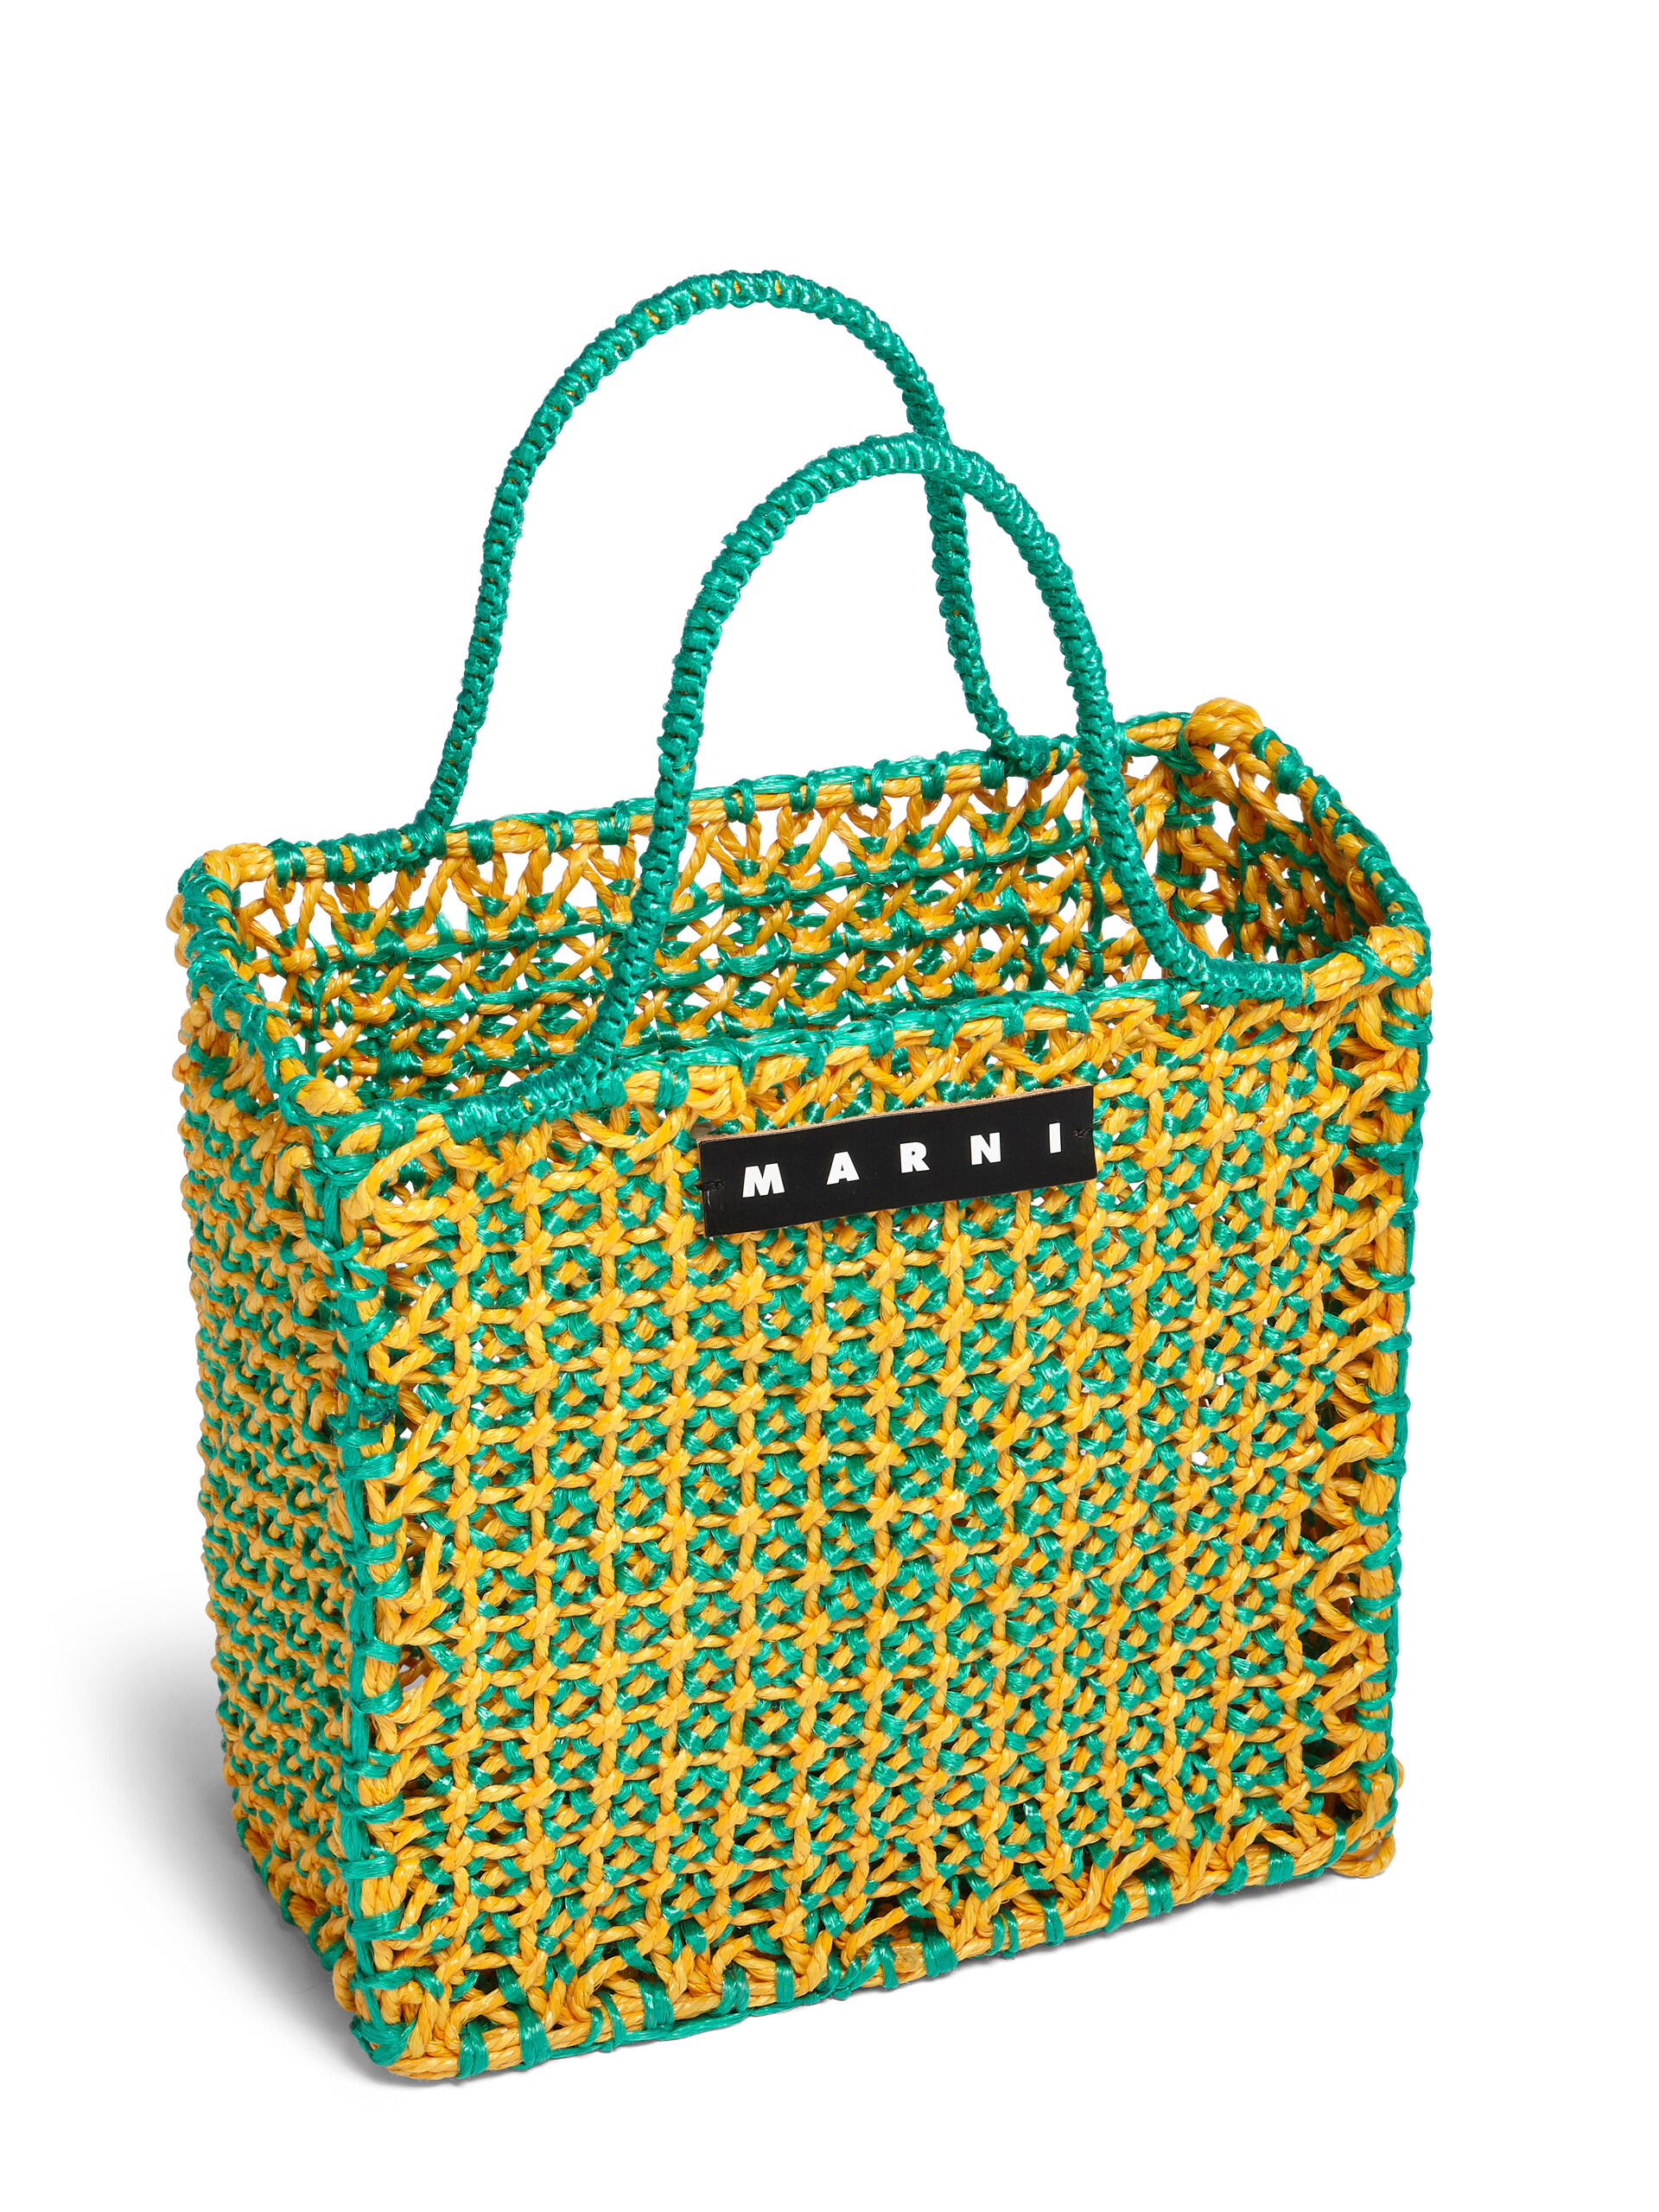 MARNI MARKET JURTA large bag in pale blue and beige crochet - Shopping Bags - Image 4